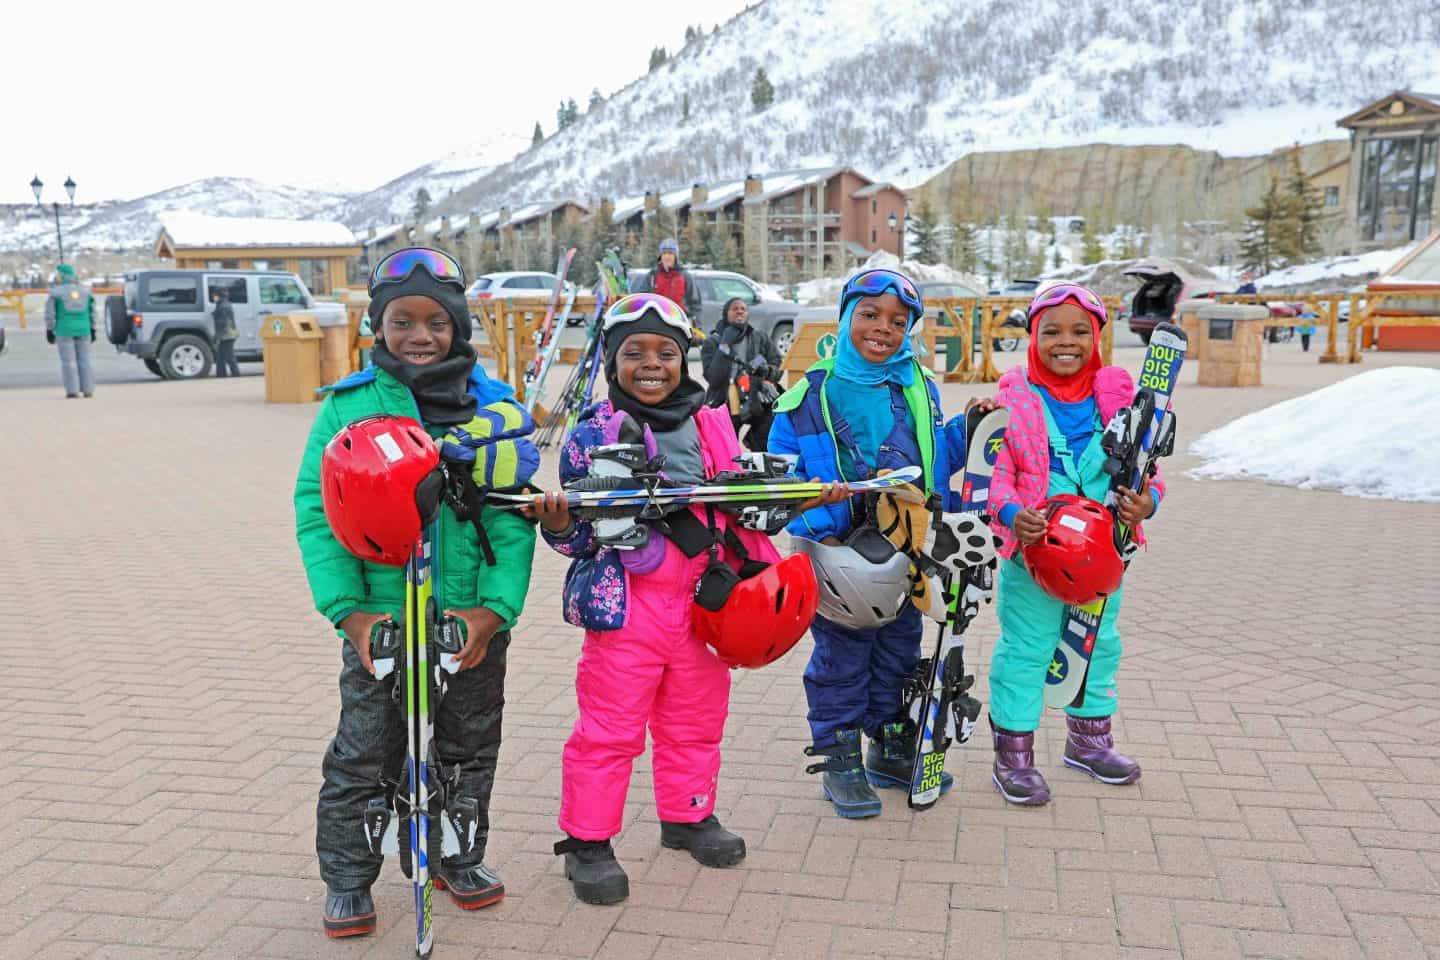 Black Family Travel deer valley ski resort utah black kids ski